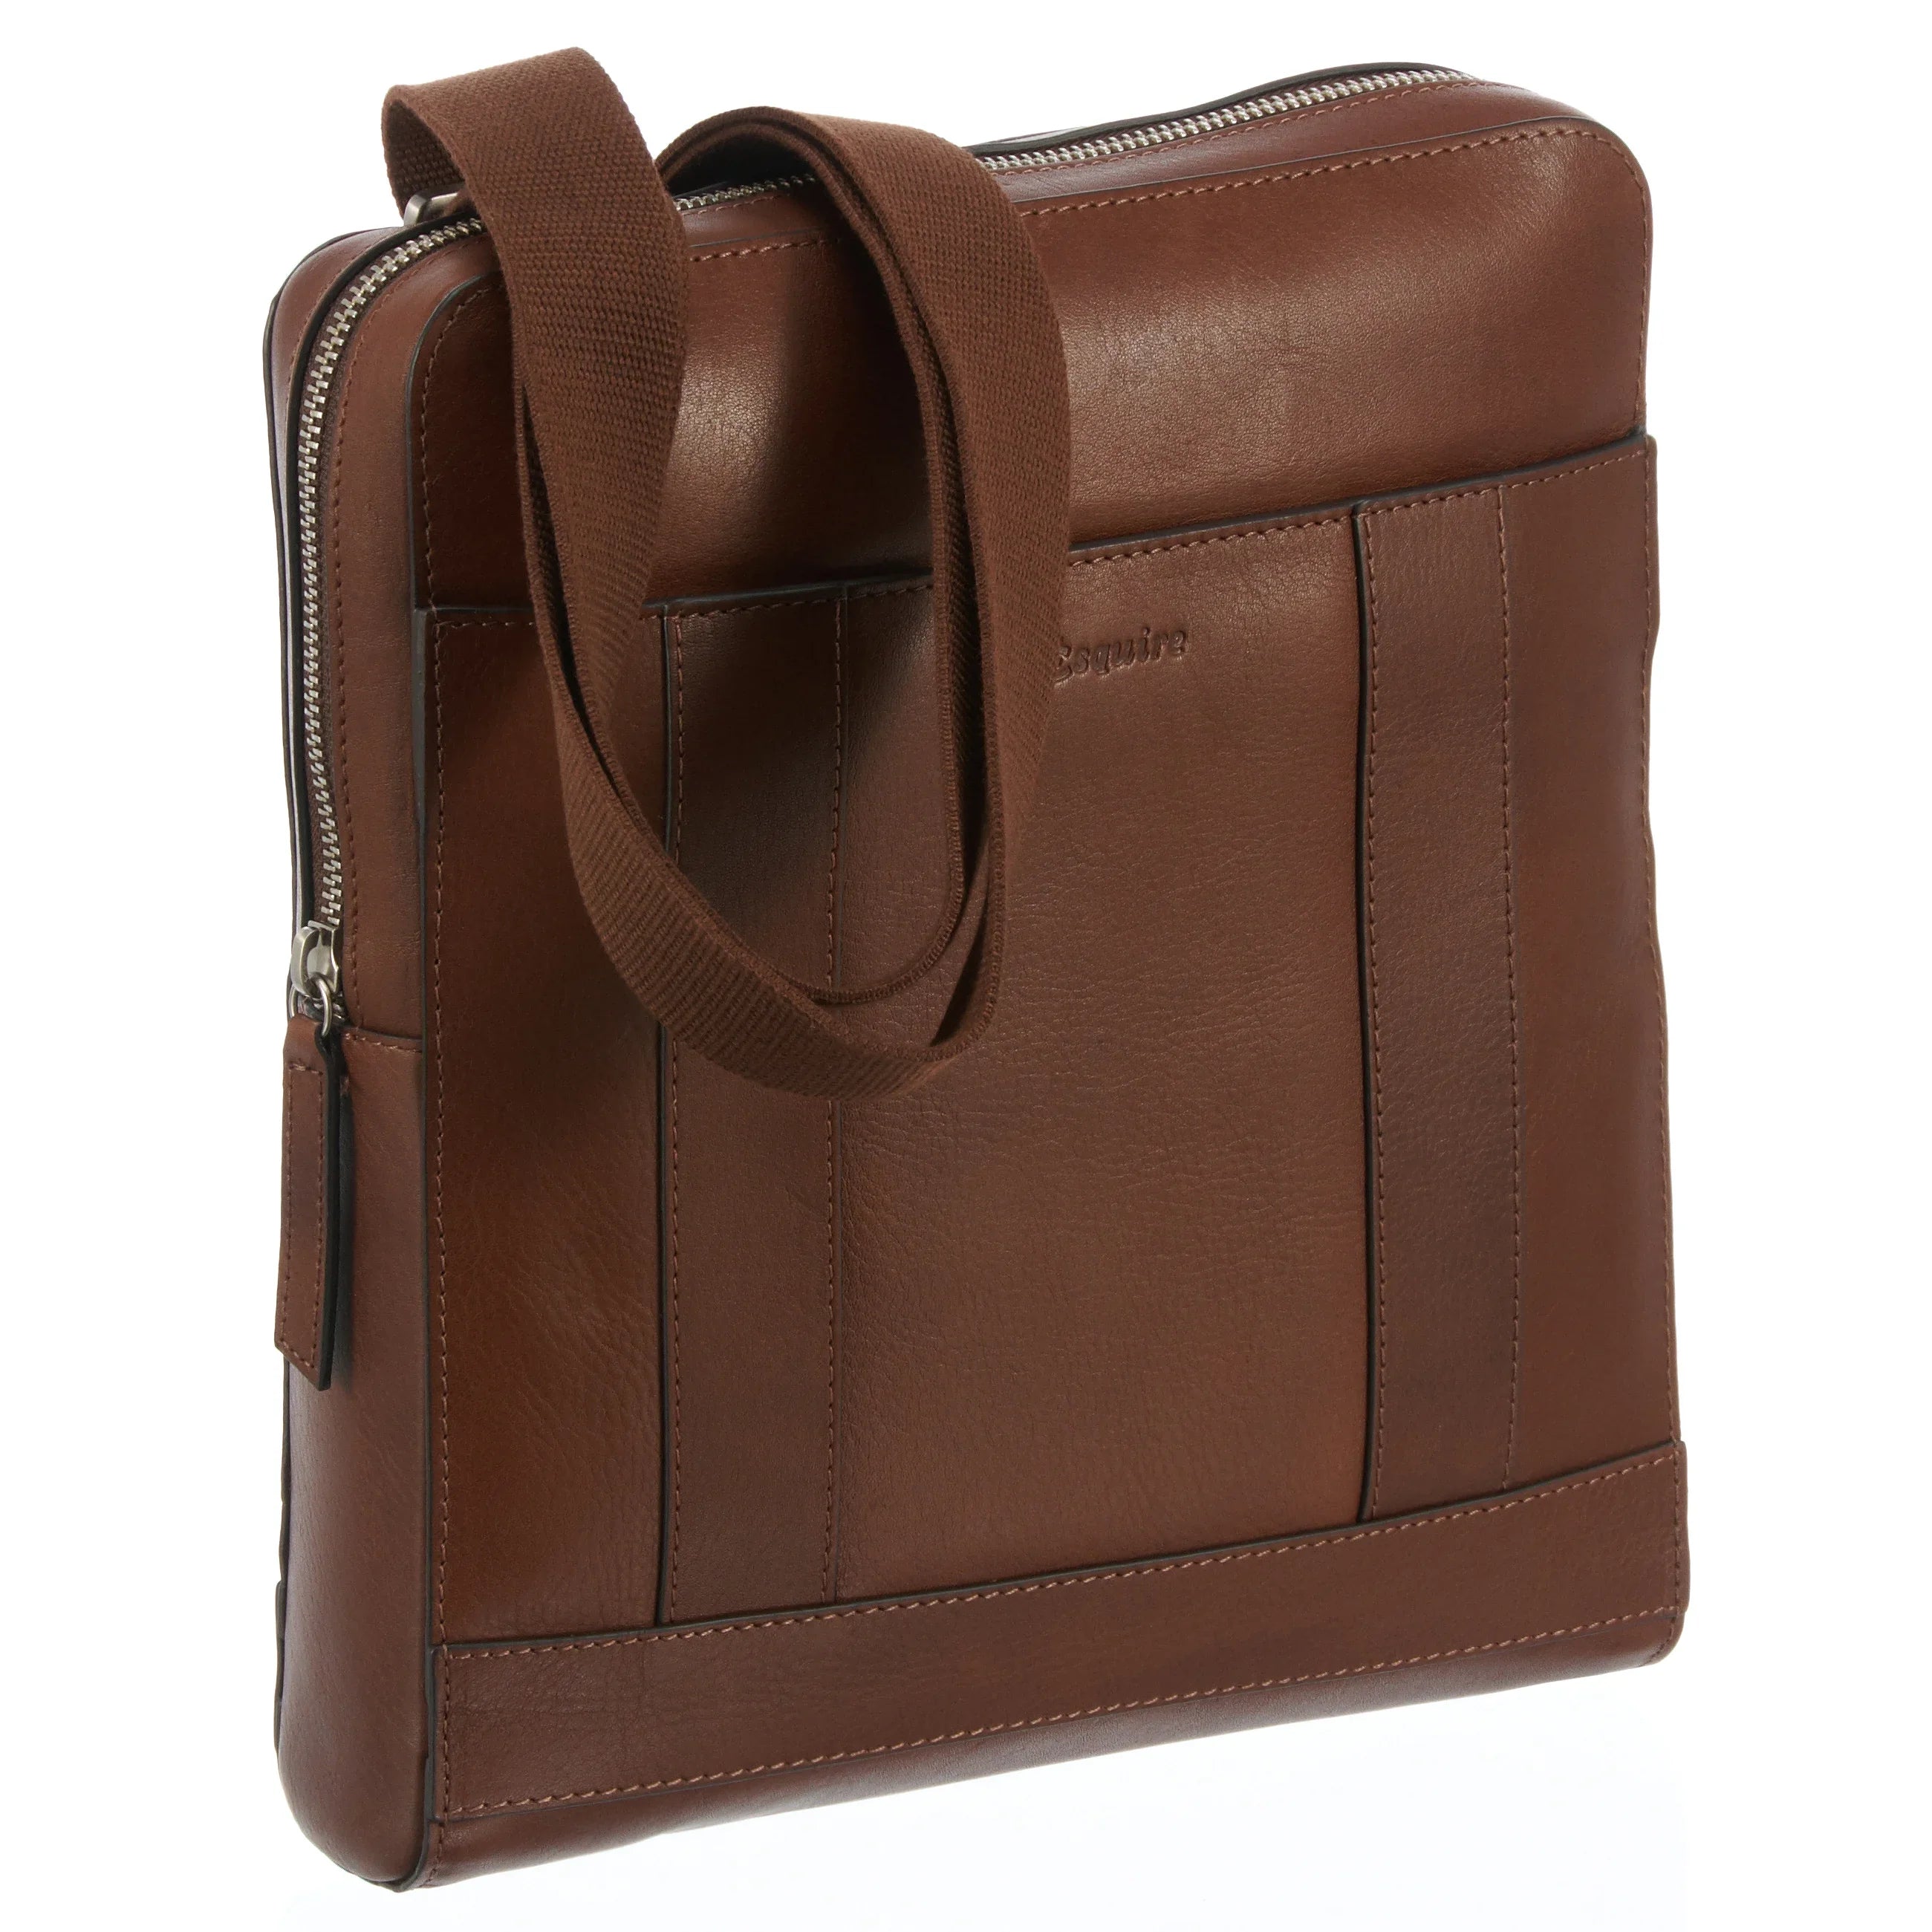 Esquire Vienna Bags sac bandoulière 28 cm - moka